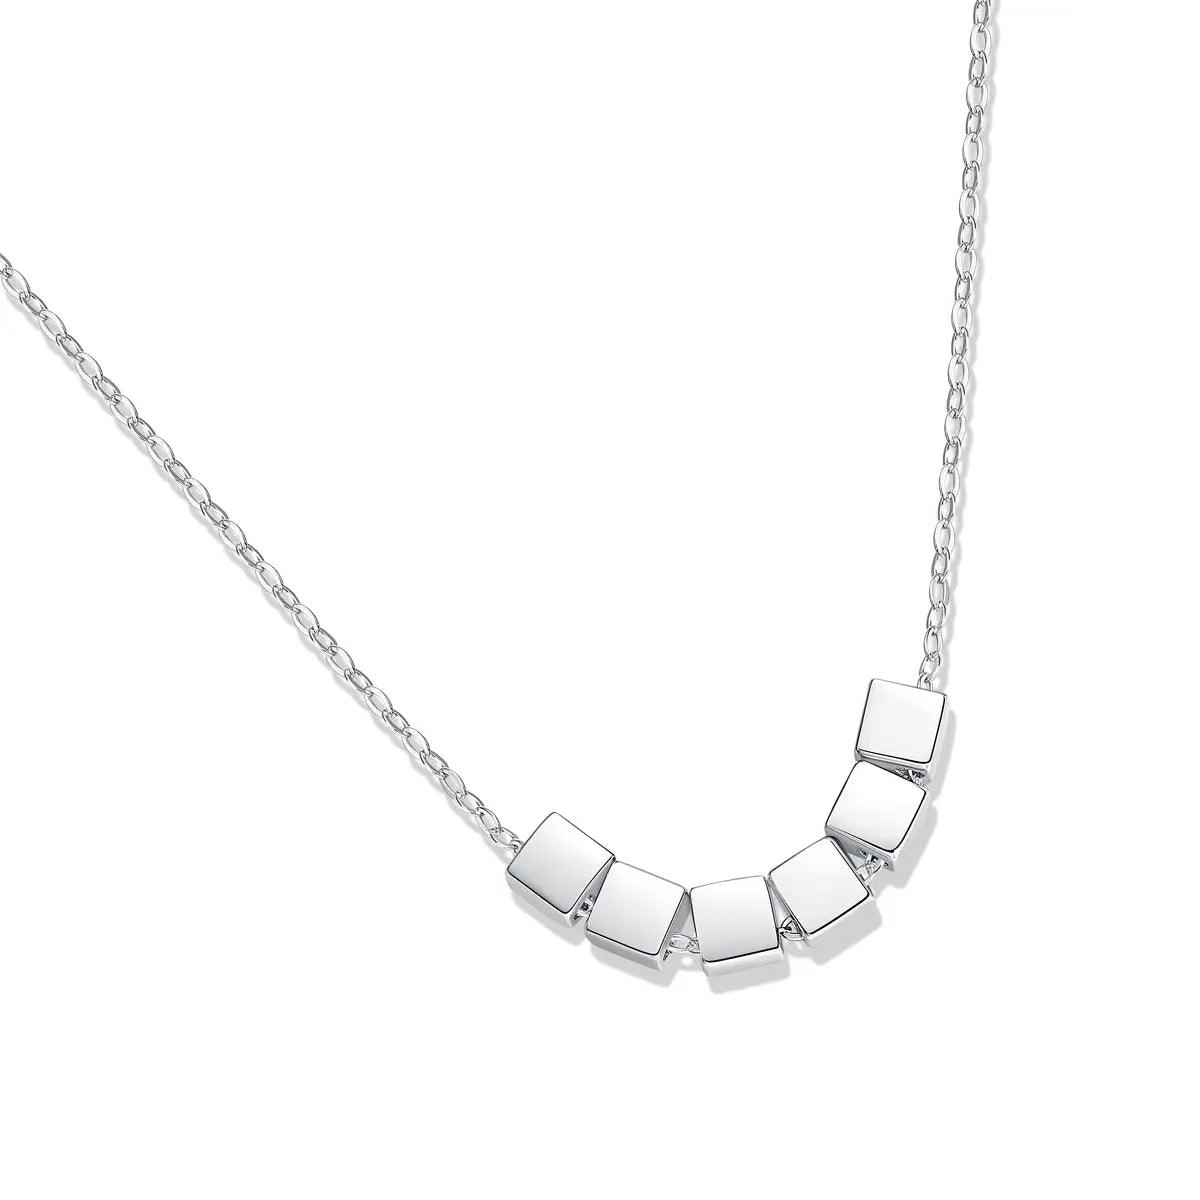 FairyLocus “Love Story” 0.3ct Moissanite Pendant Necklace Sterling Silver D Color VVS1 Clarity Brilliant Round Cut Lab Created Diamond Necklace FLZZNLMS07 FairyLocus